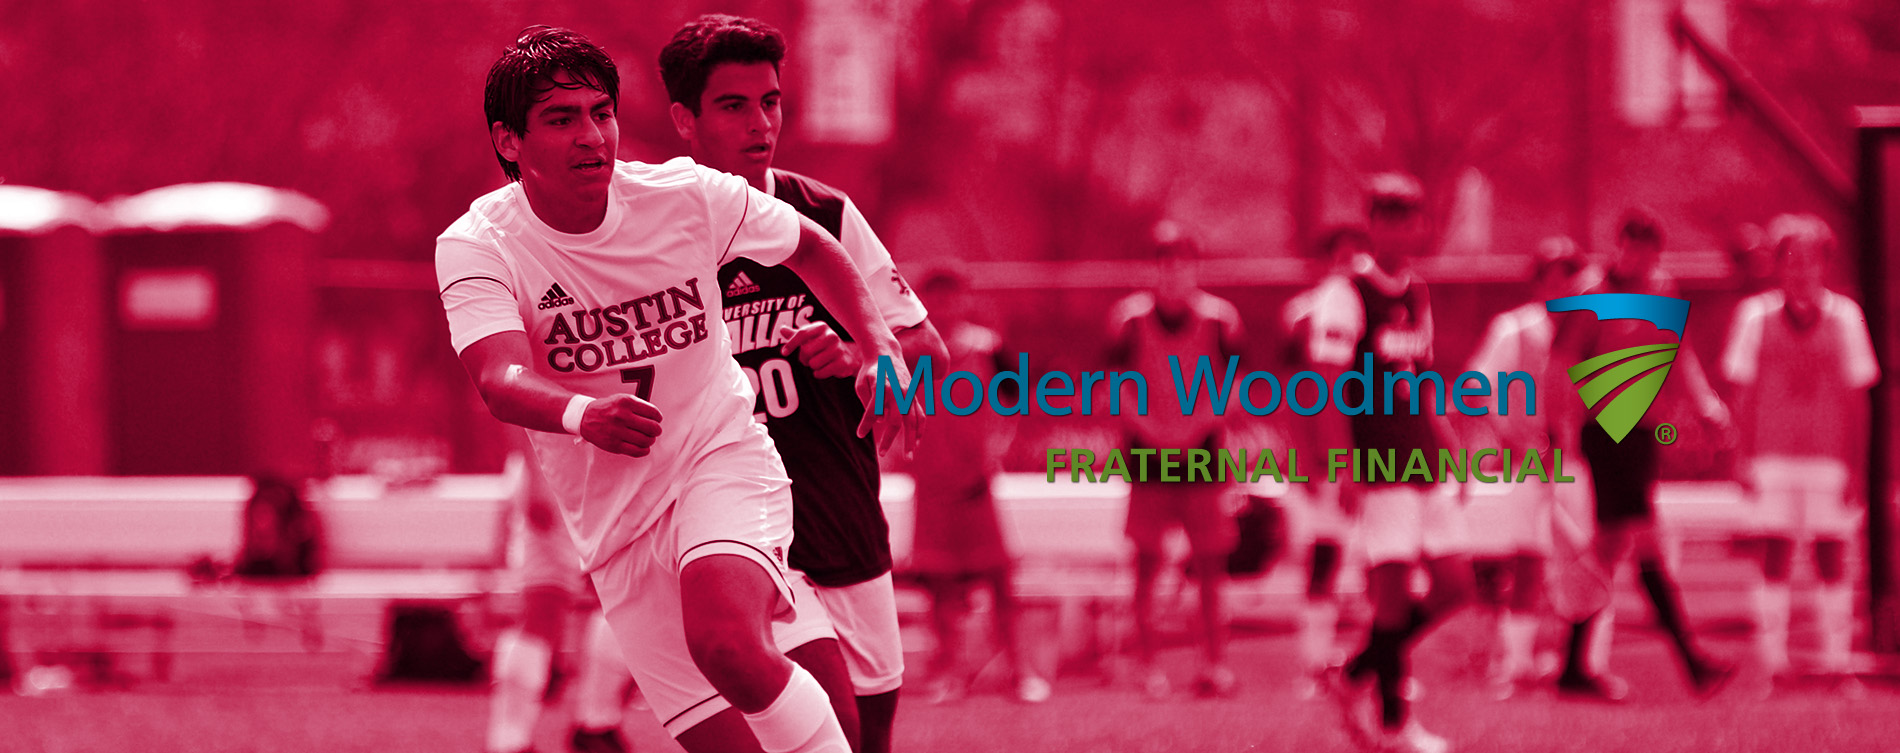 Rodriguez Named Modern Woodmen Student-Athlete of the Week